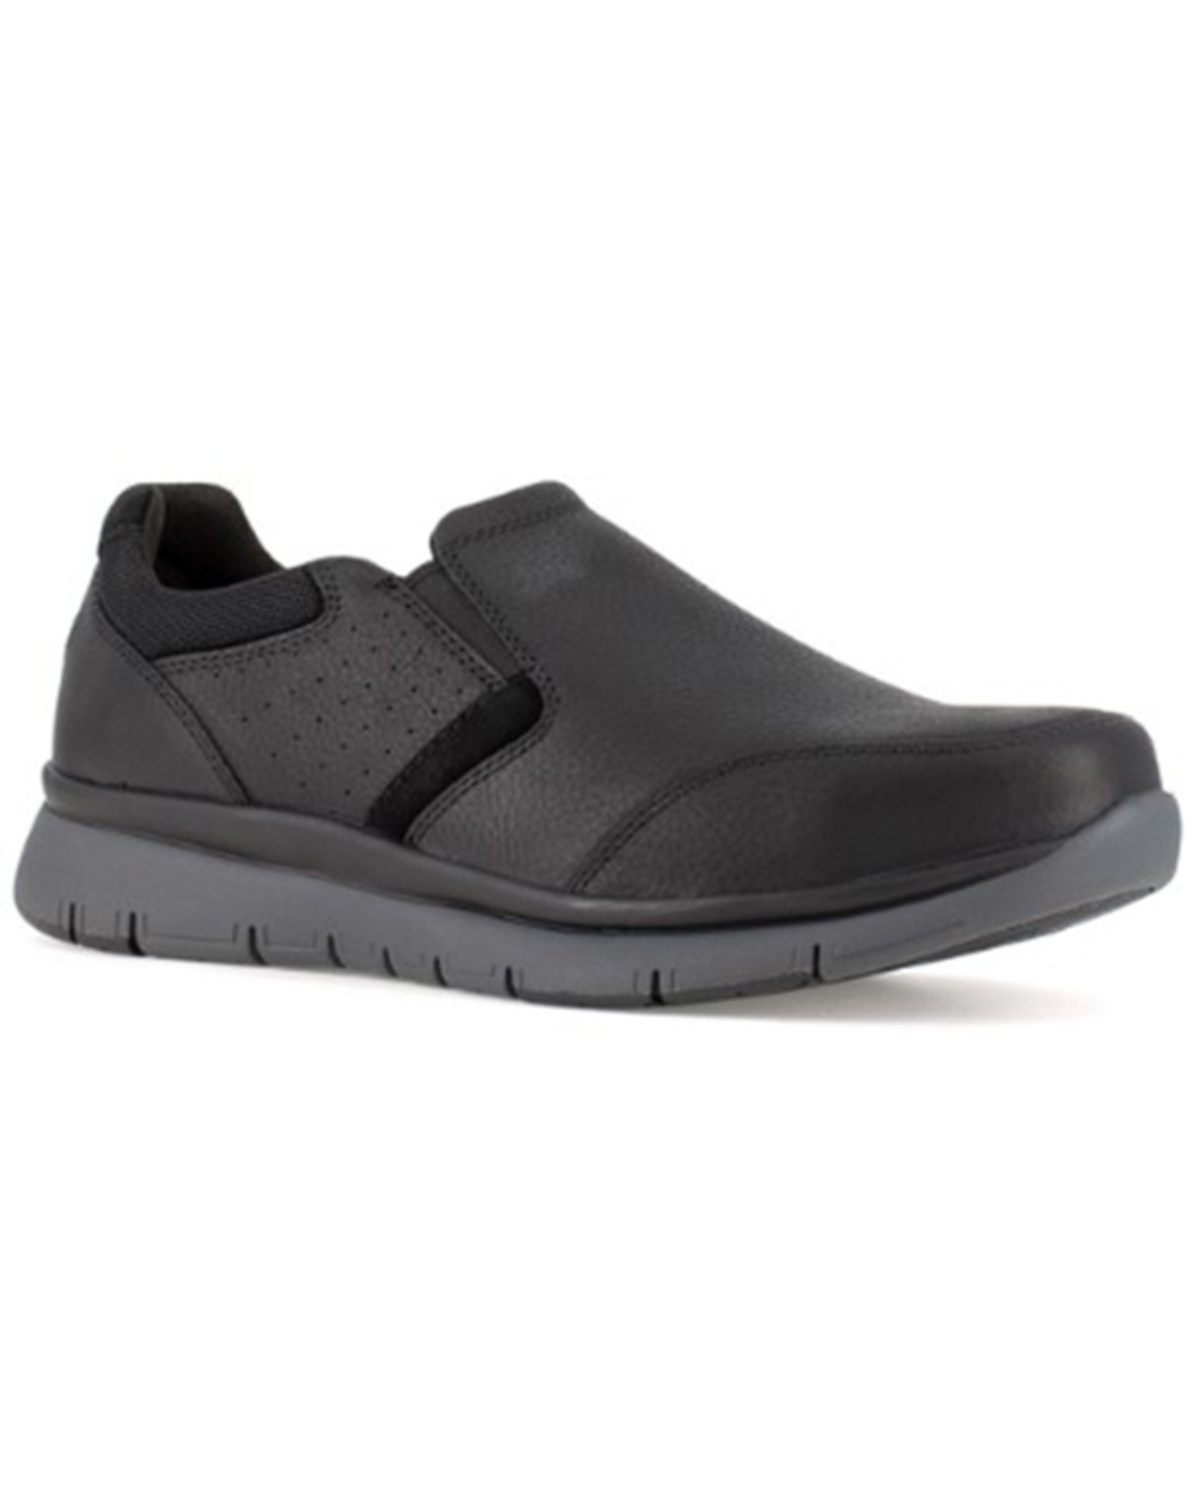 Rockport Men's Slip-On Casual Work Shoes